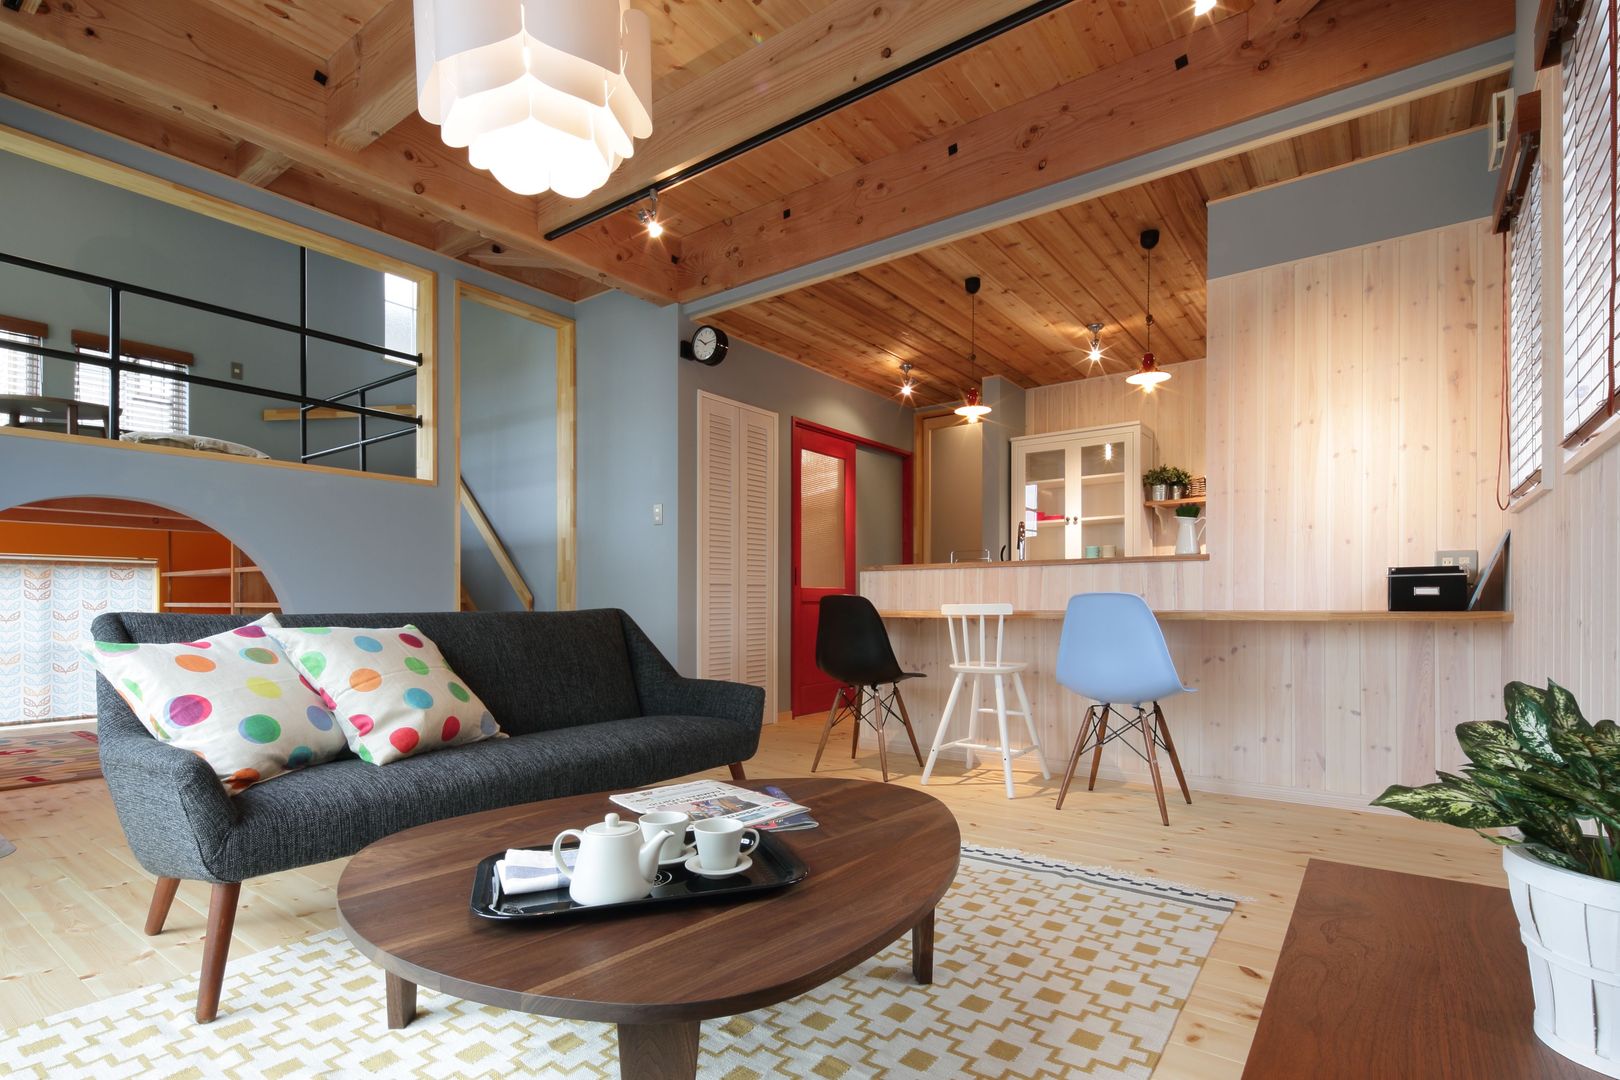 K's HOUSE, dwarf dwarf Scandinavian style living room